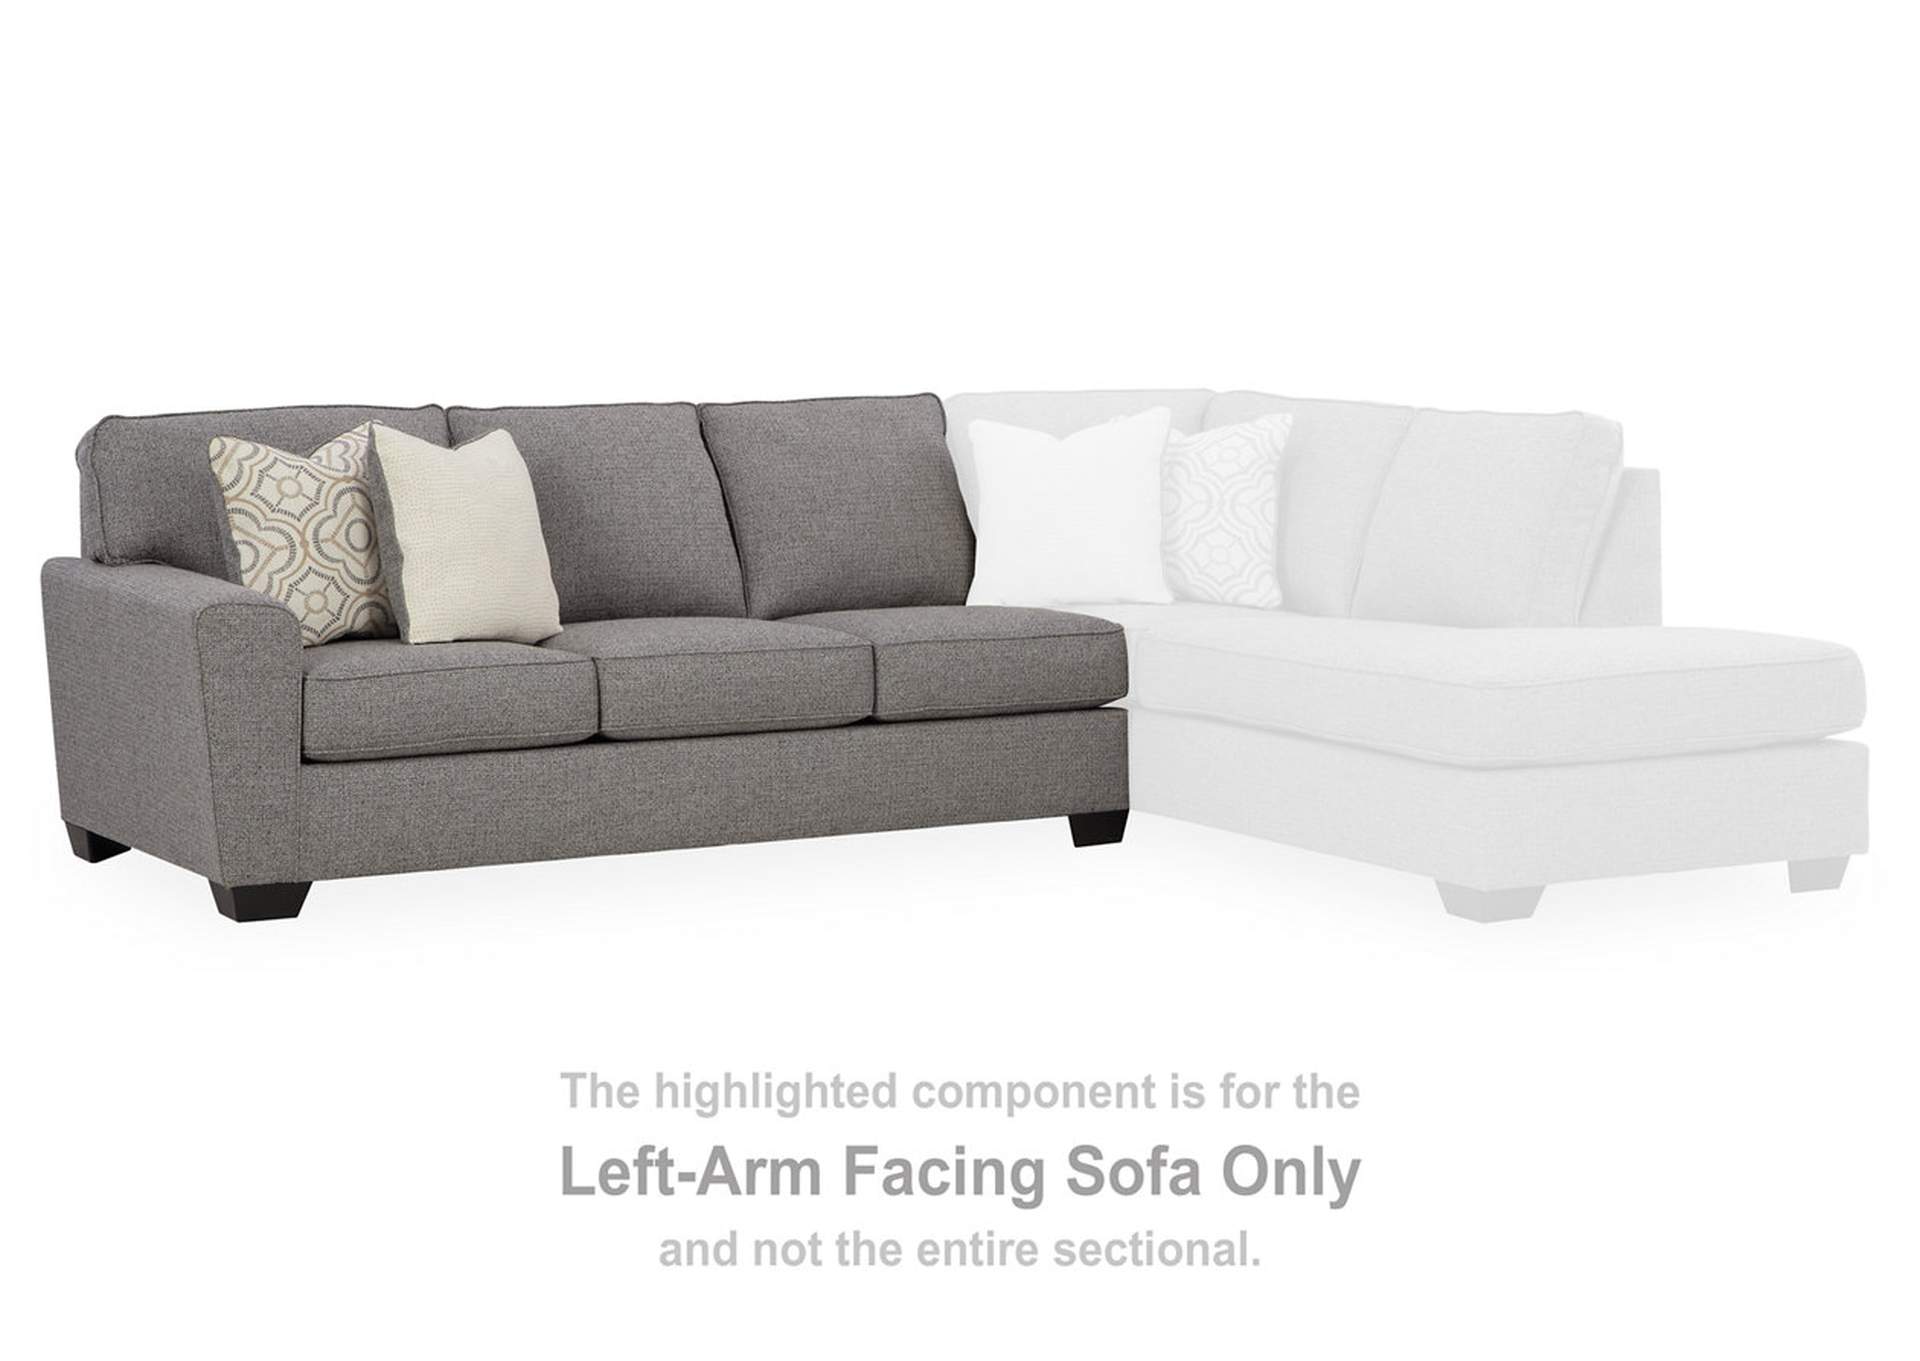 Reydell Left-Arm Facing Sofa,Signature Design By Ashley